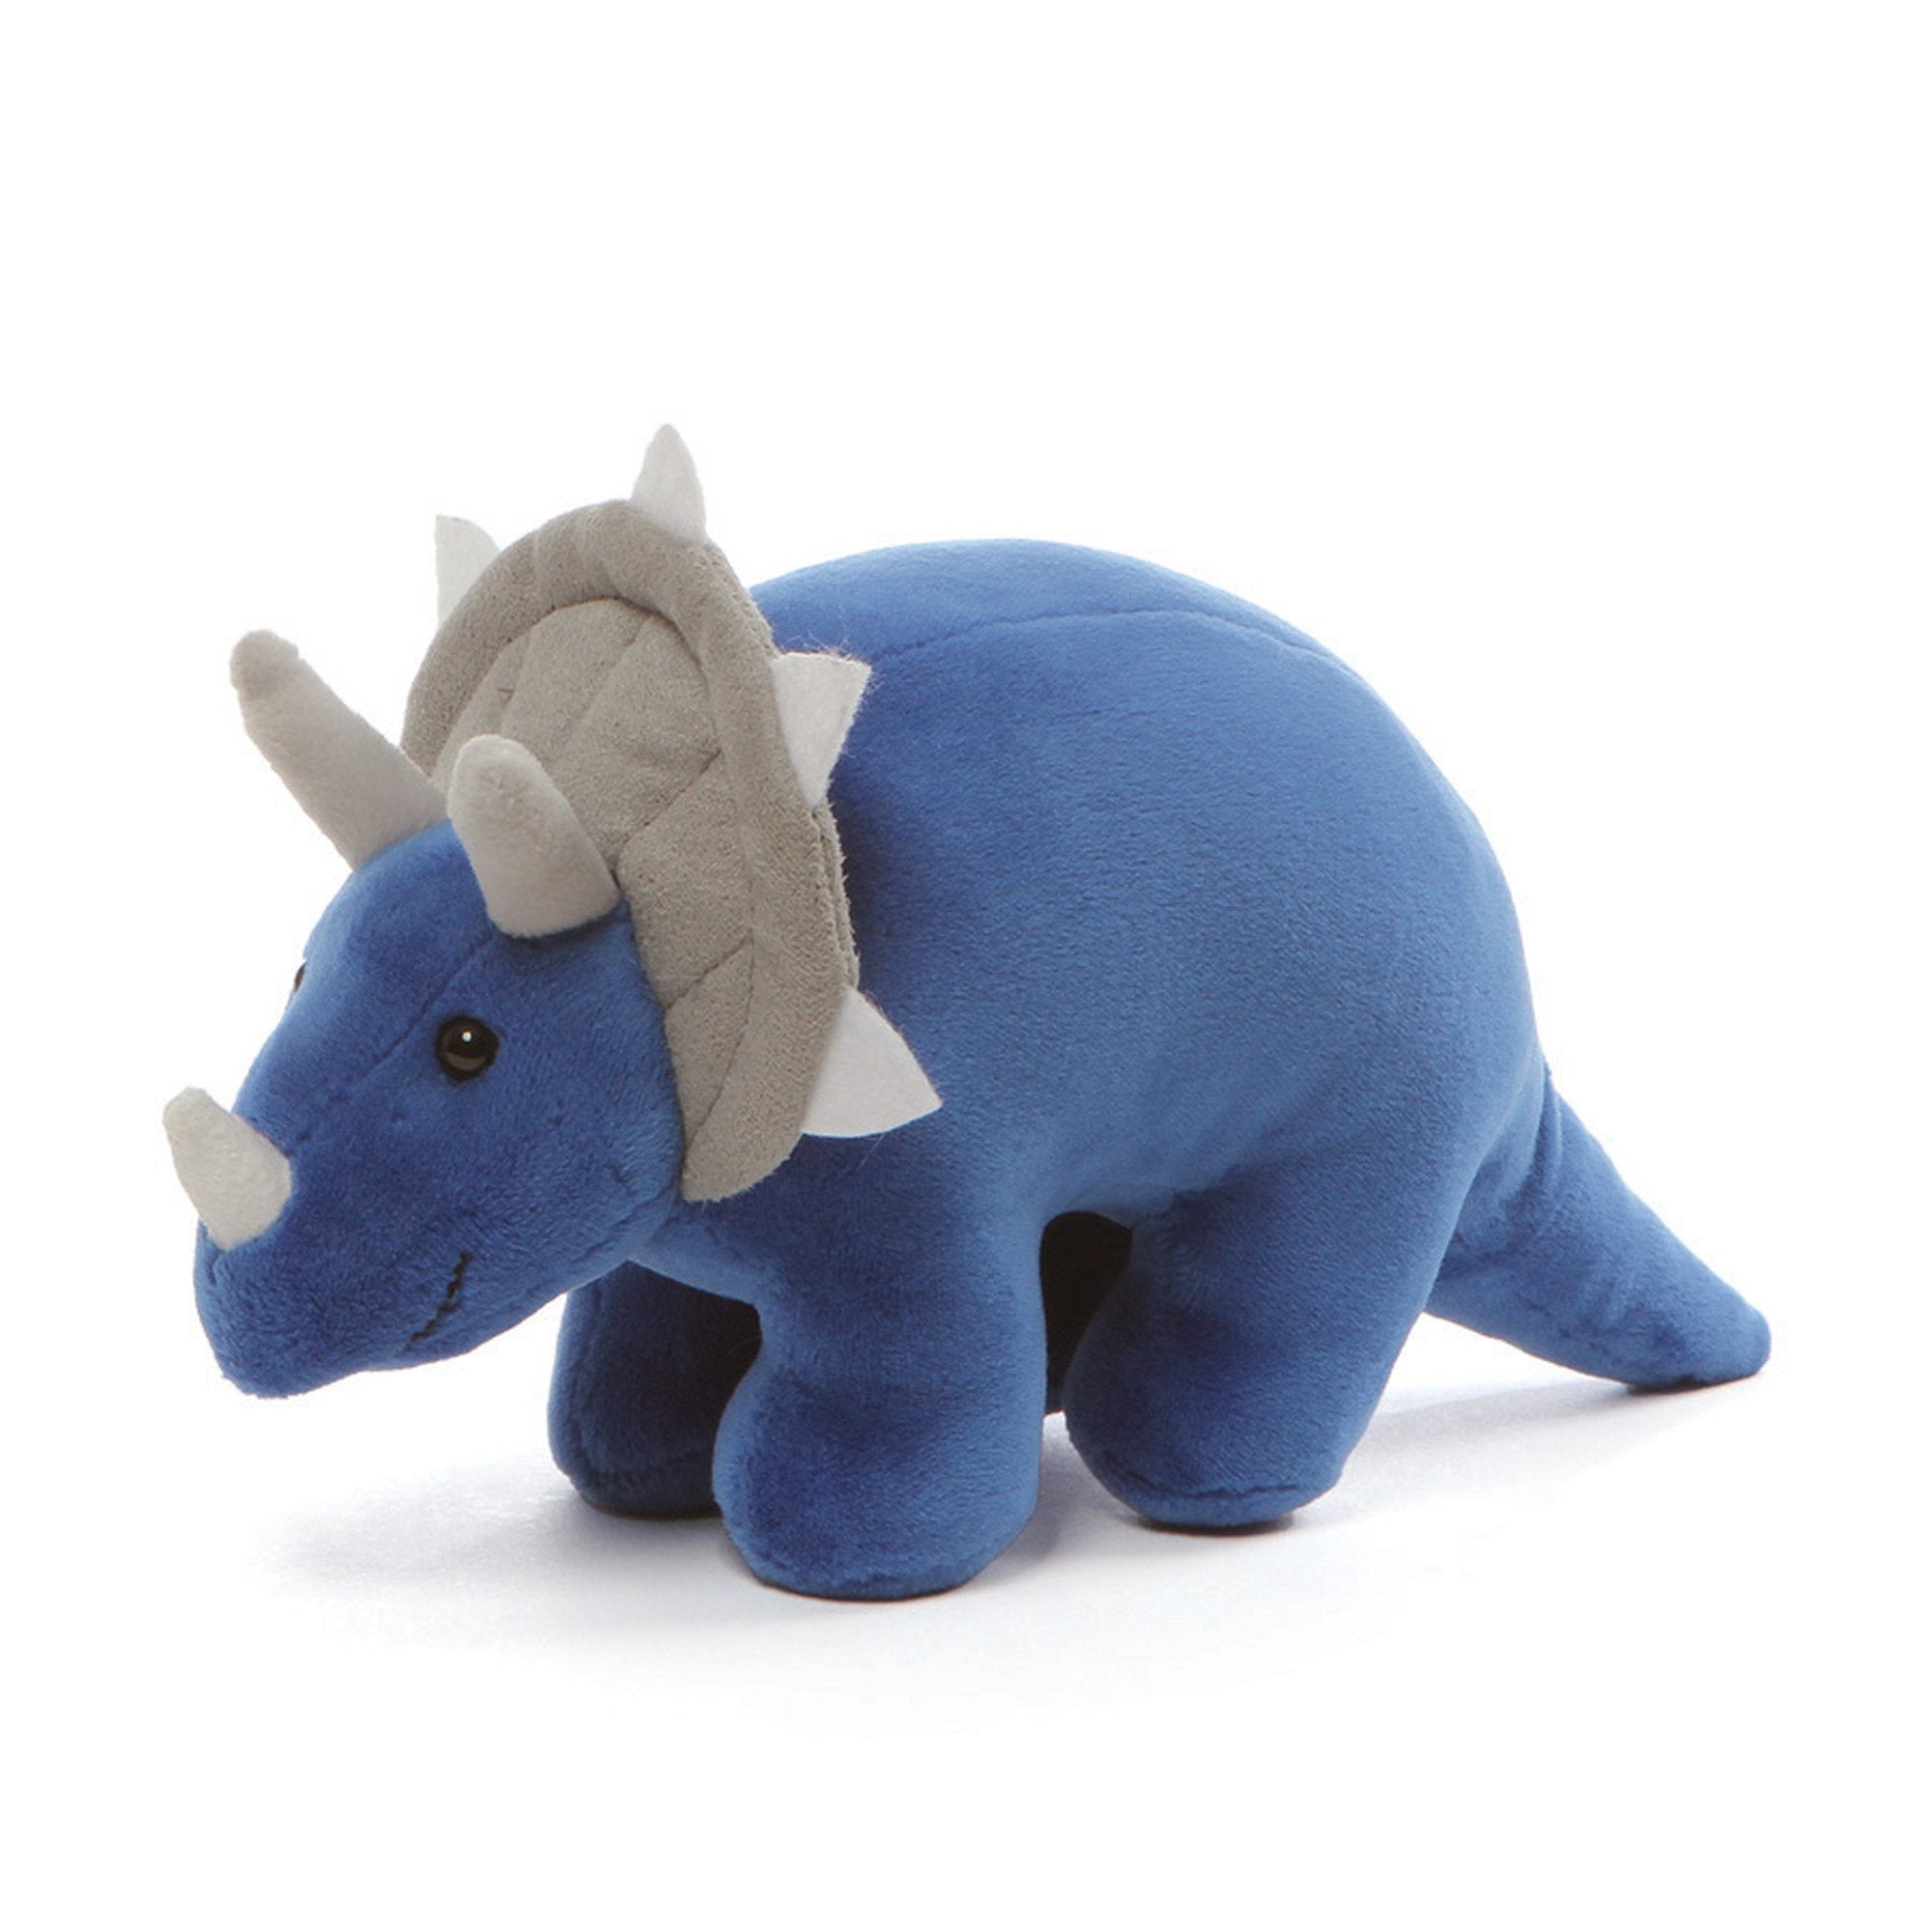 Gund Dino Chatter - ANB Baby -dinosaur plush toys